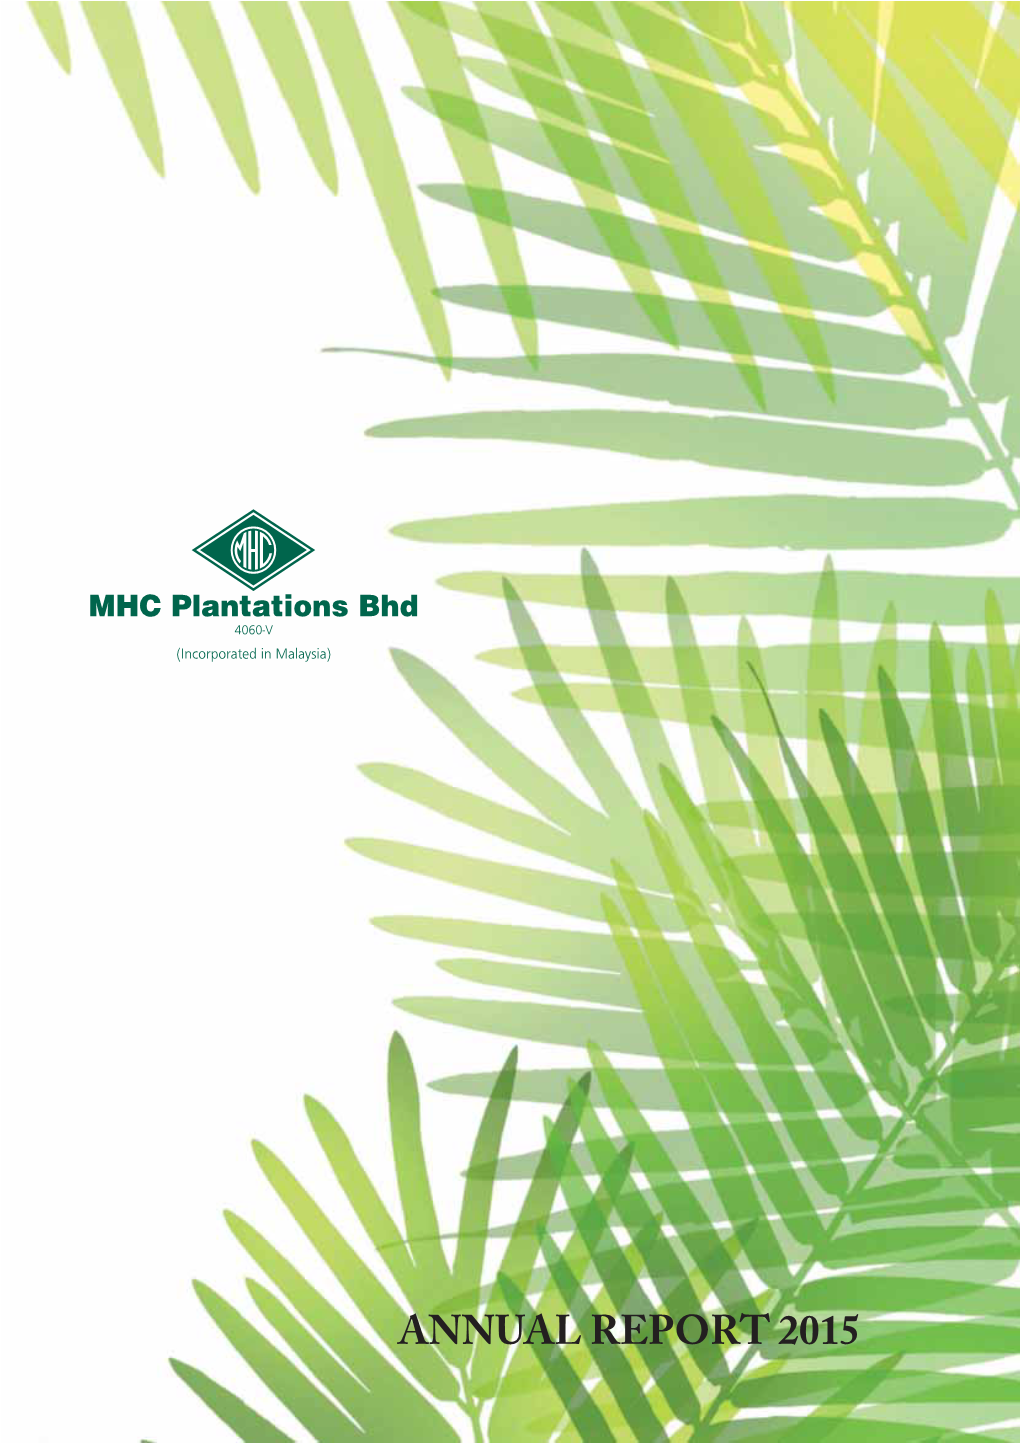 MHC Plantations Bhd Annual Report 2015